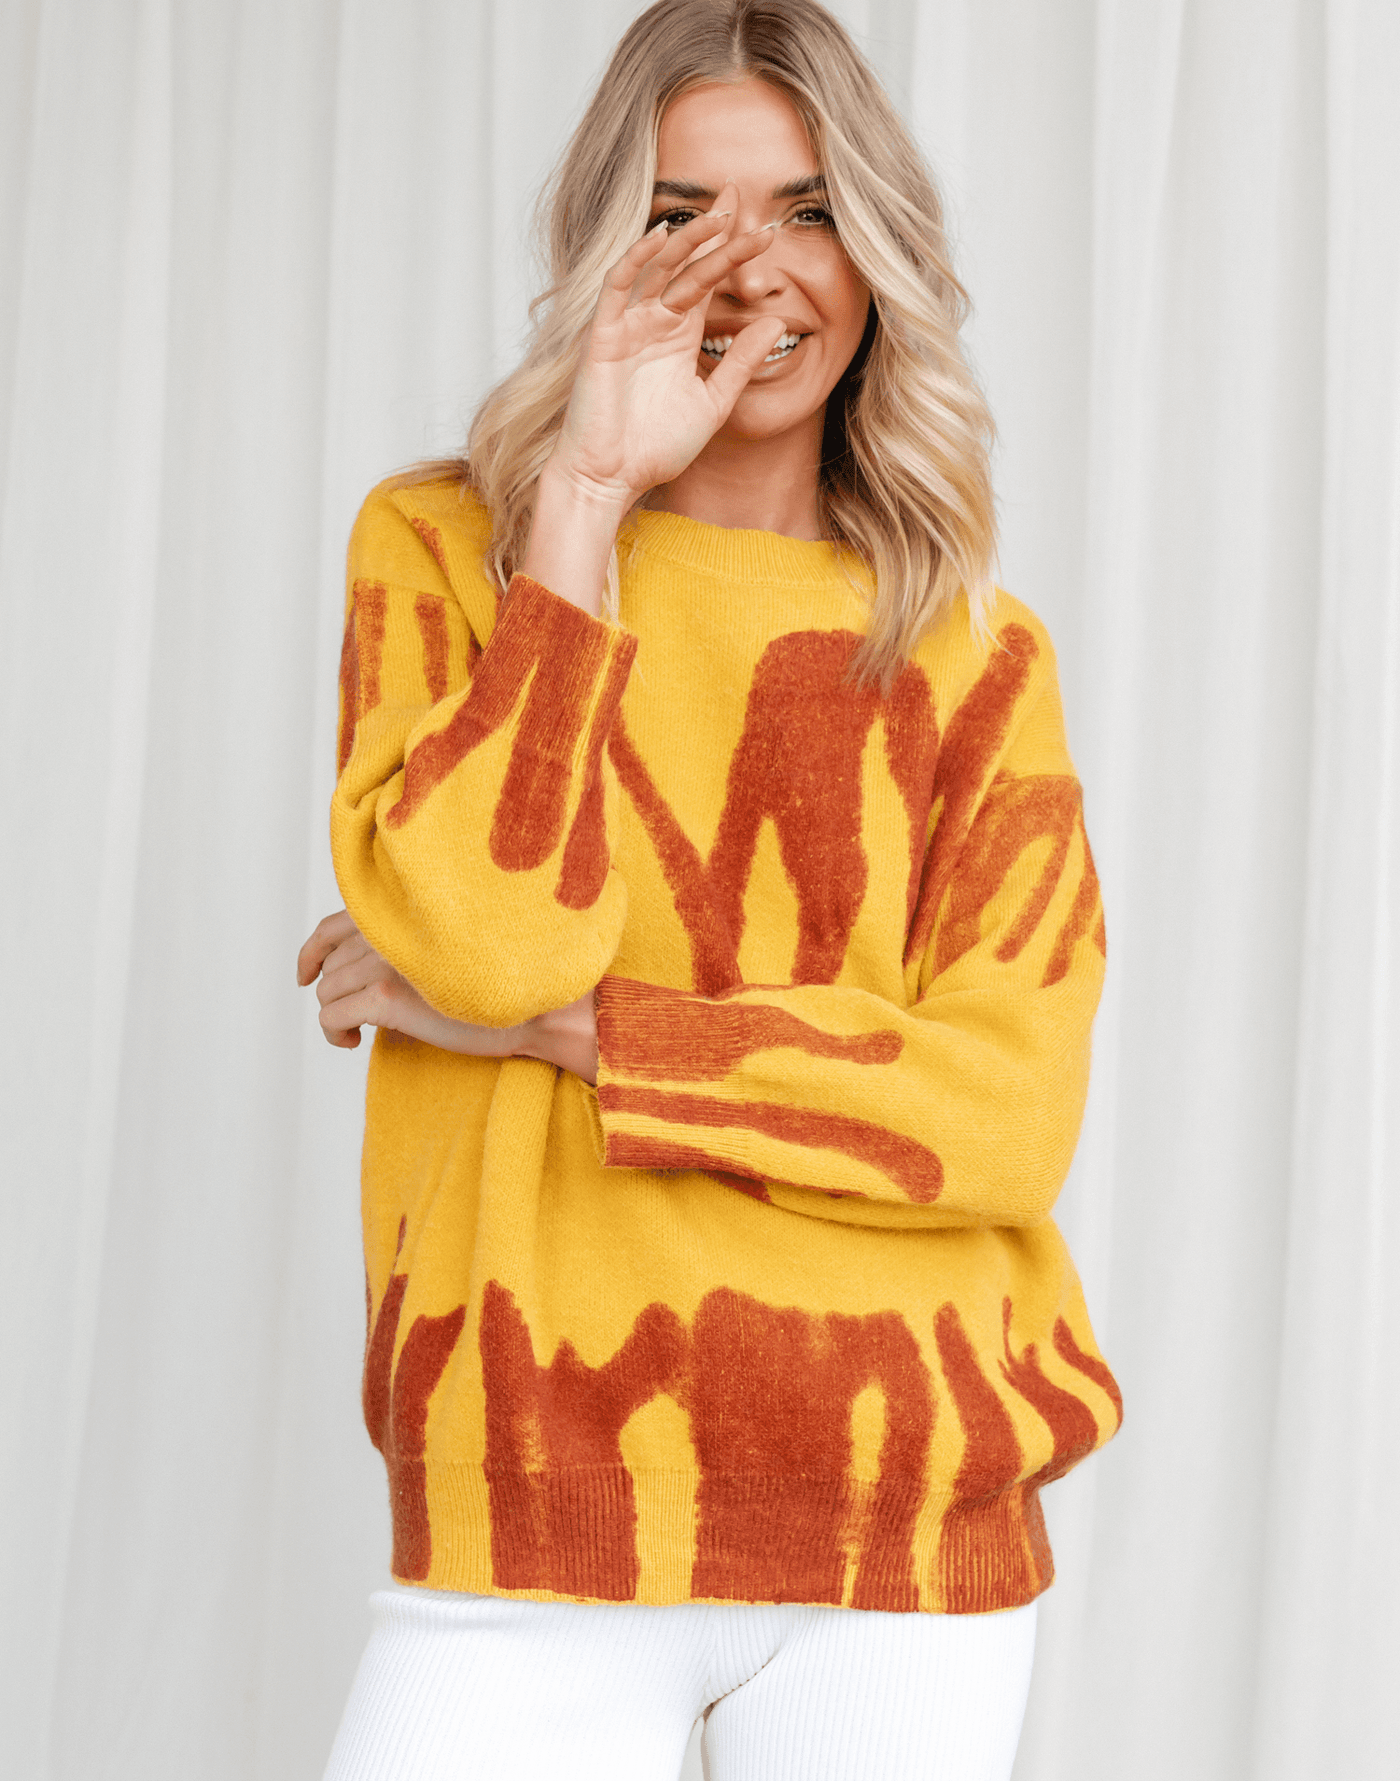 Ashtyn Knit Jumper (Mustard) - Mustard and Orange Knit Jumper - Women's Top - Charcoal Clothing